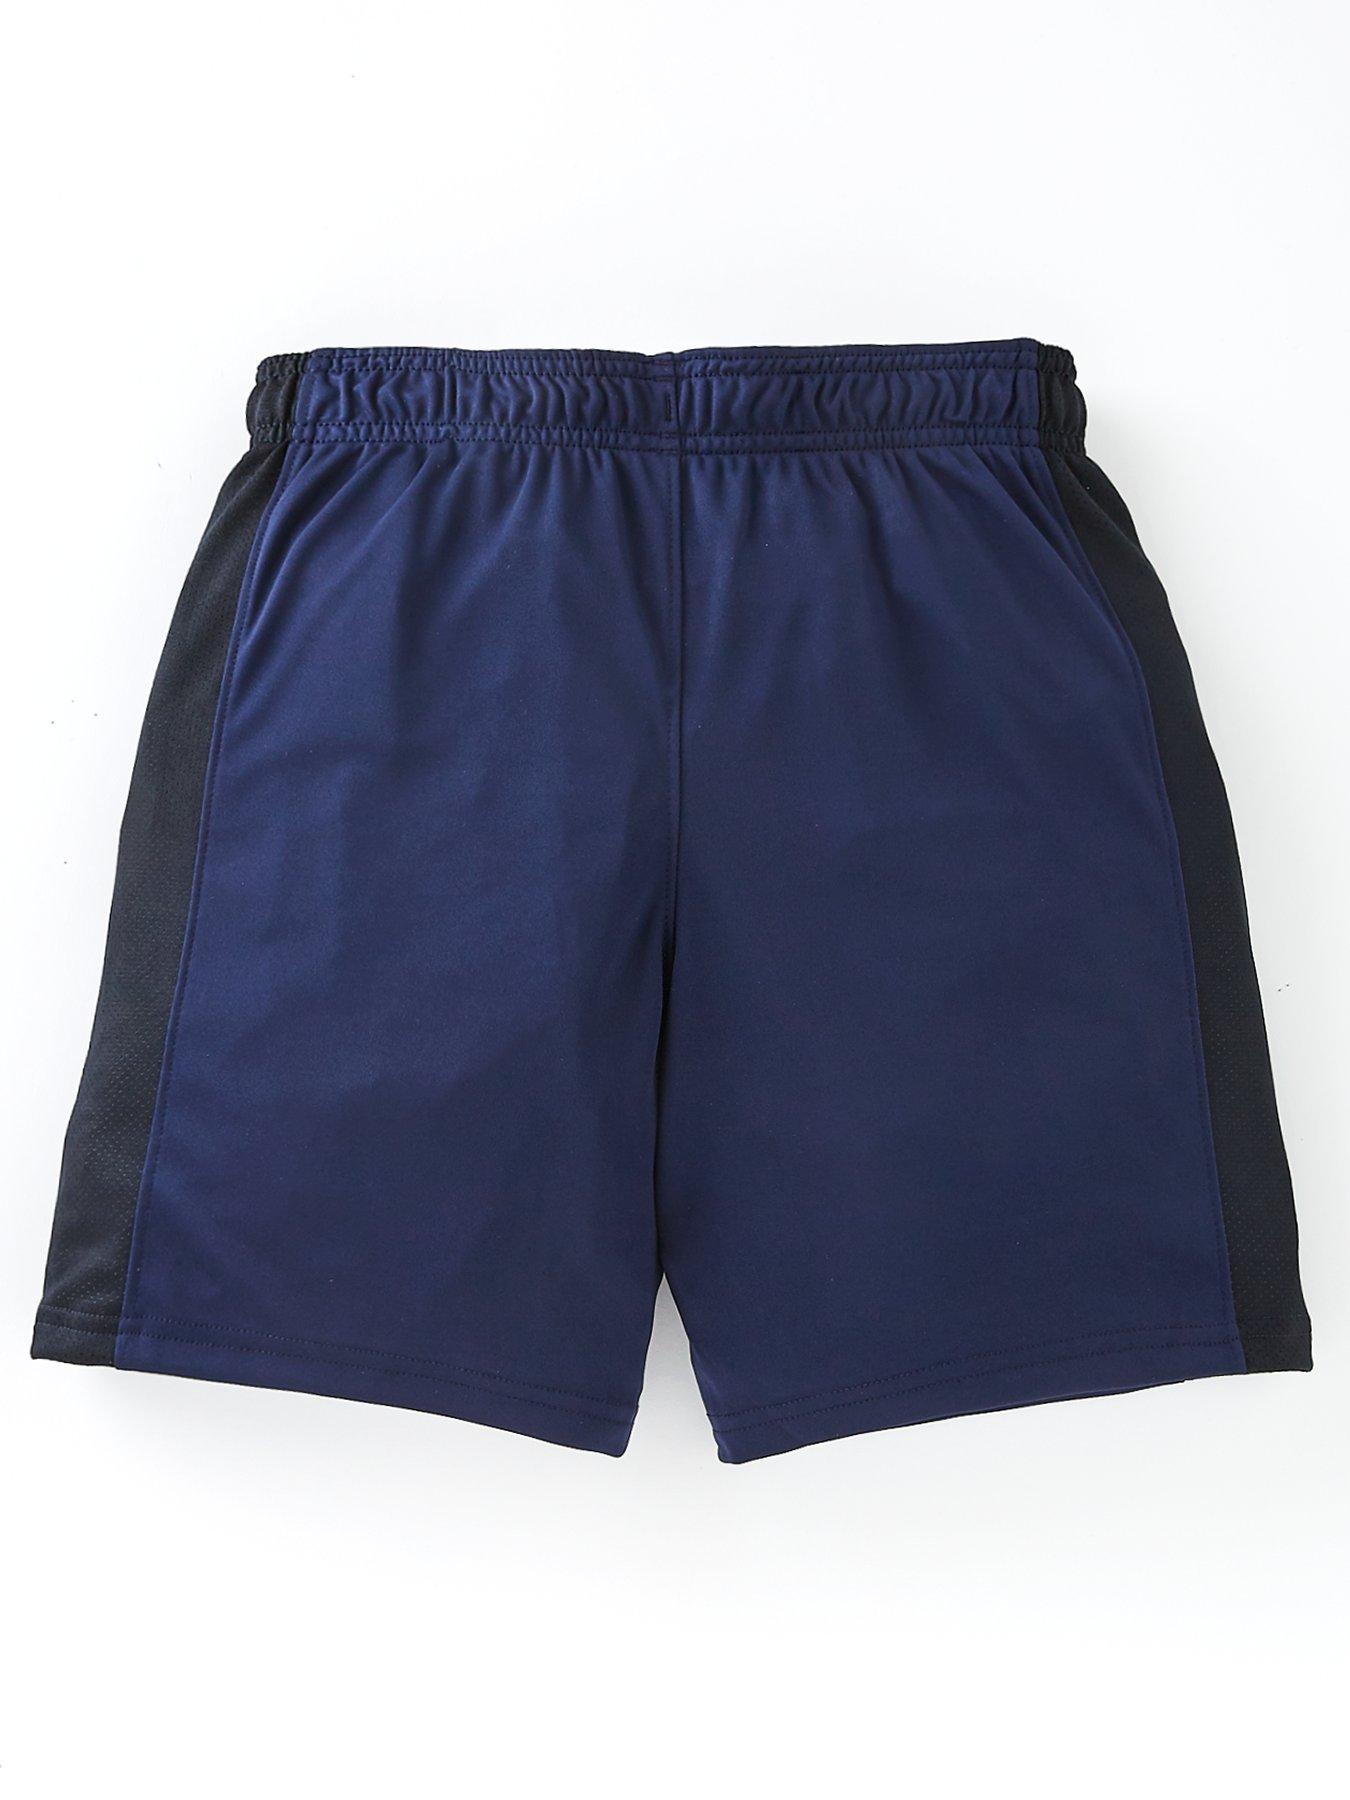 Shorts Under Armour Challenger Knit Short-WHT